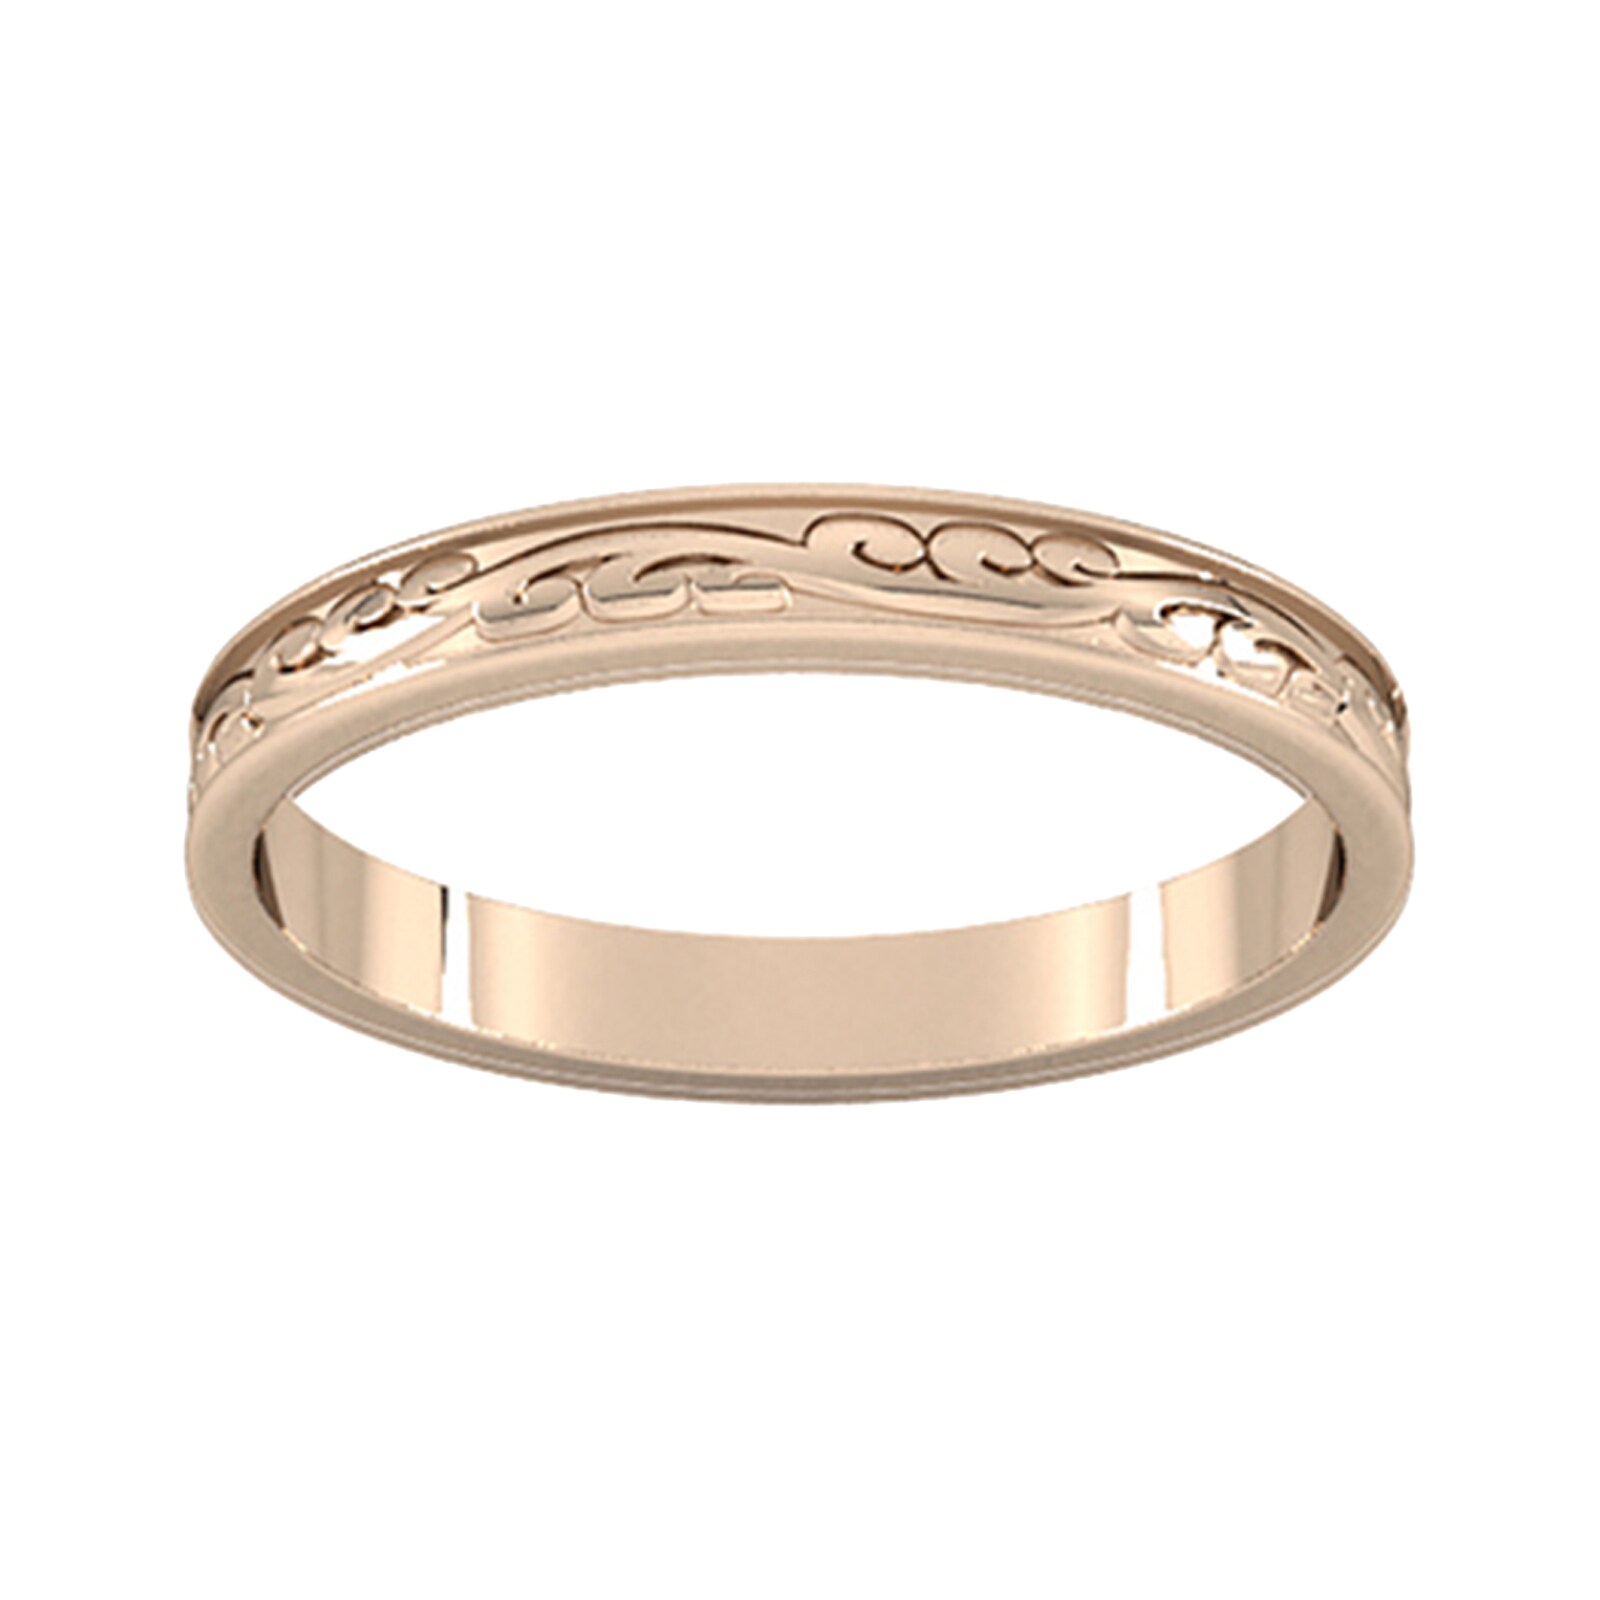 2.5mm Hand Engraved Wedding Ring In 9 Carat Rose Gold - Ring Size V